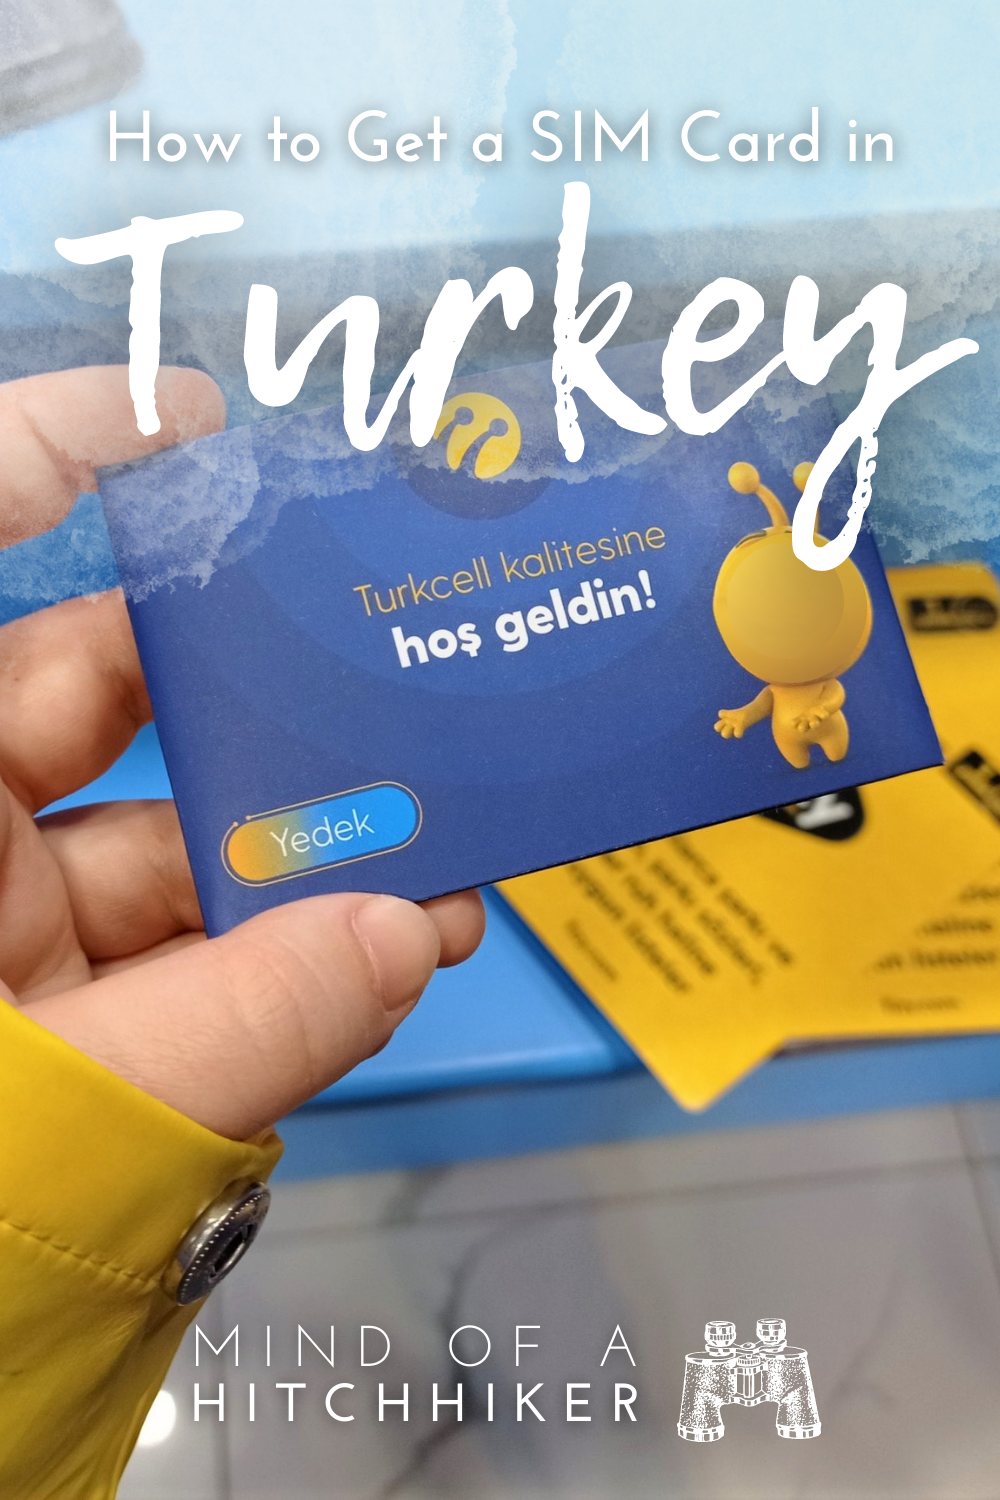 Turkish SIM card pin